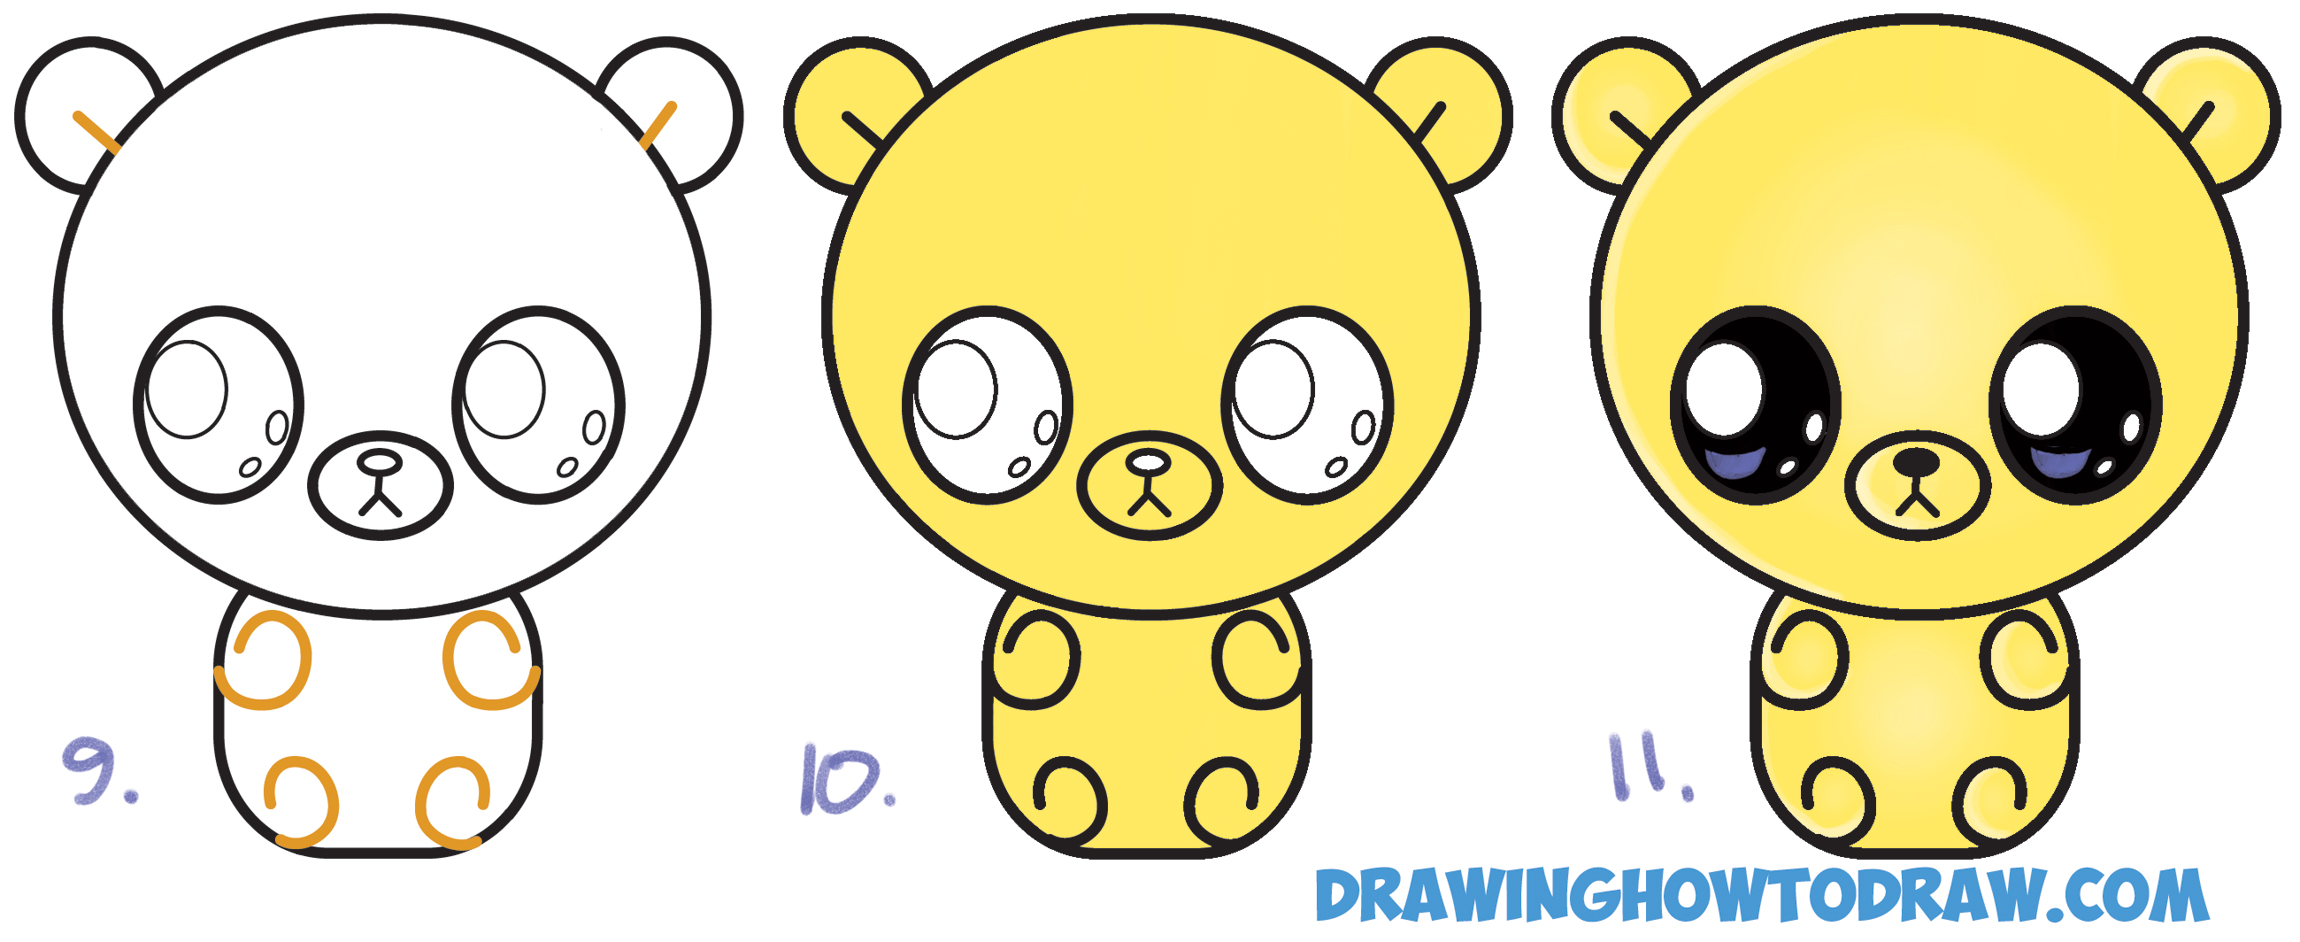 How to Draw a Cute Chibi / Kawaii / Cartoon Gummy Bear Easy Step by